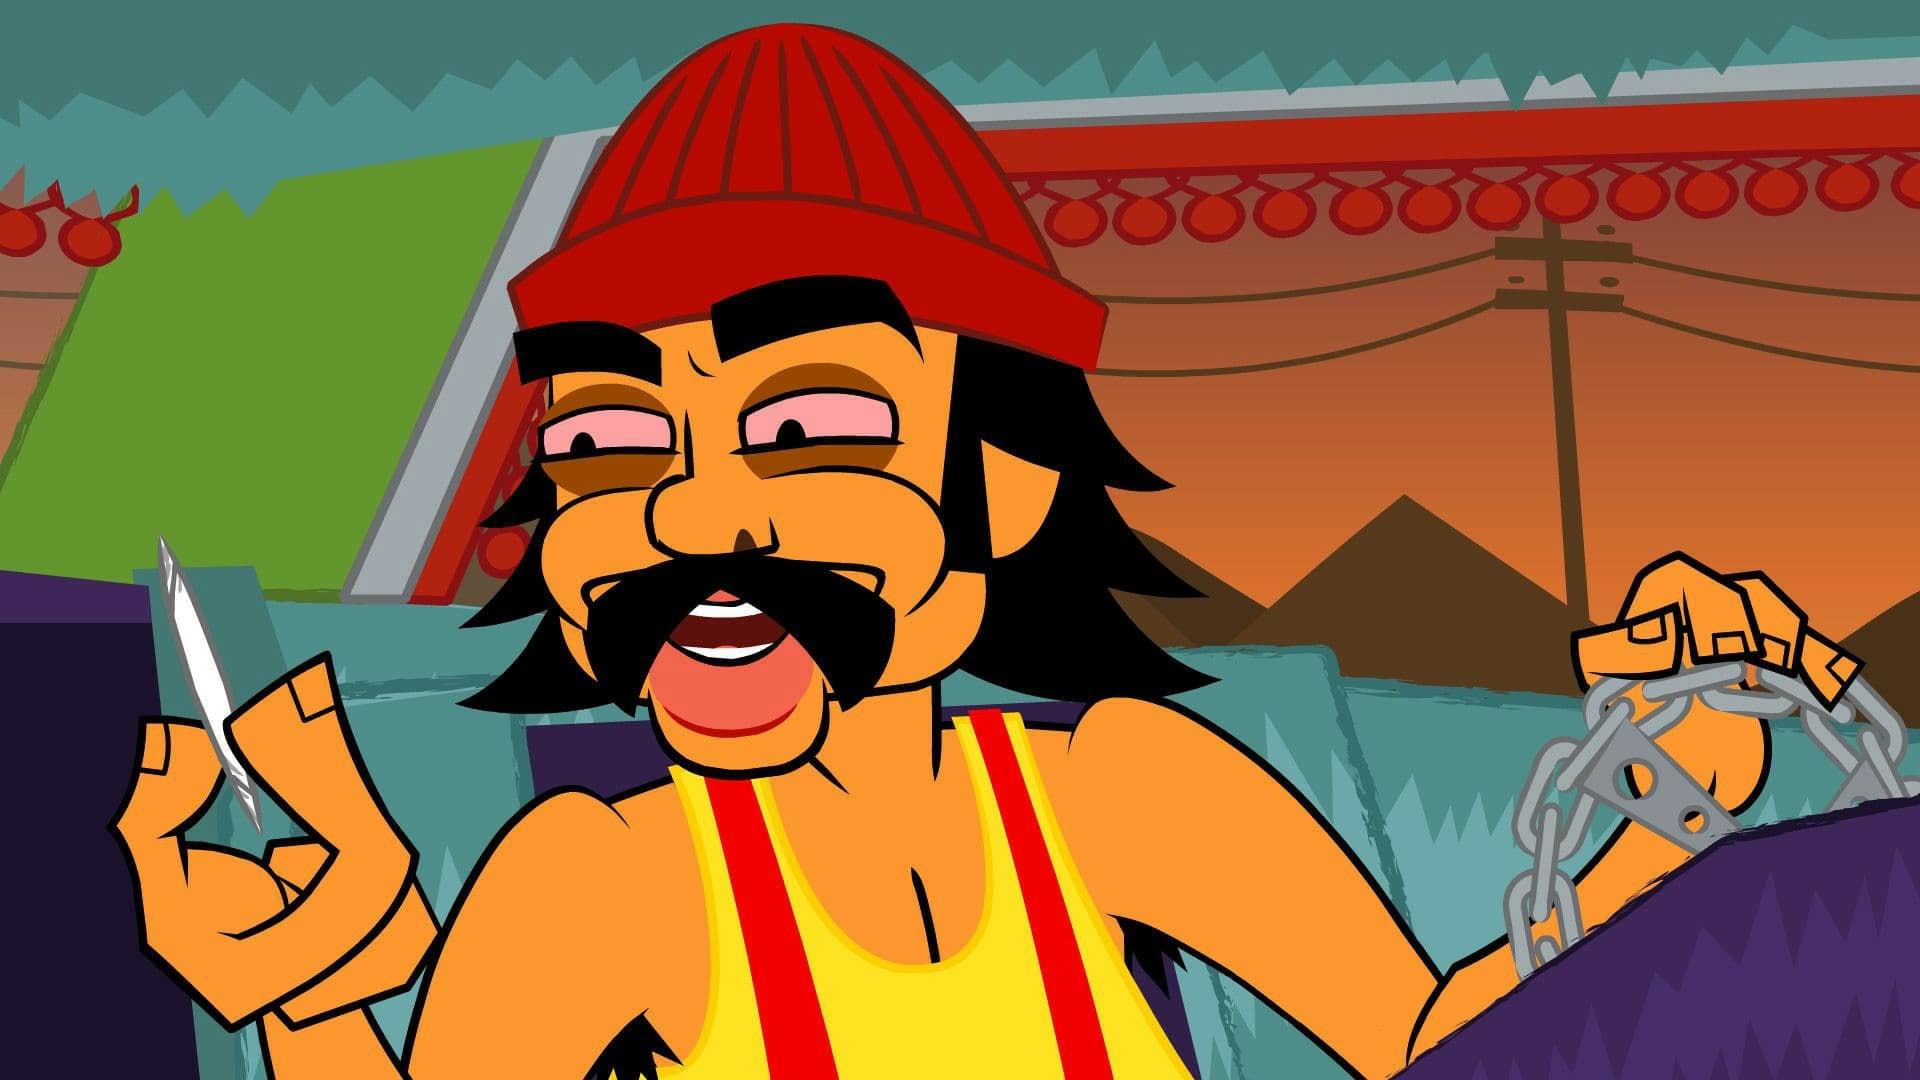 Cheech & Chong's Animated Movie backdrop